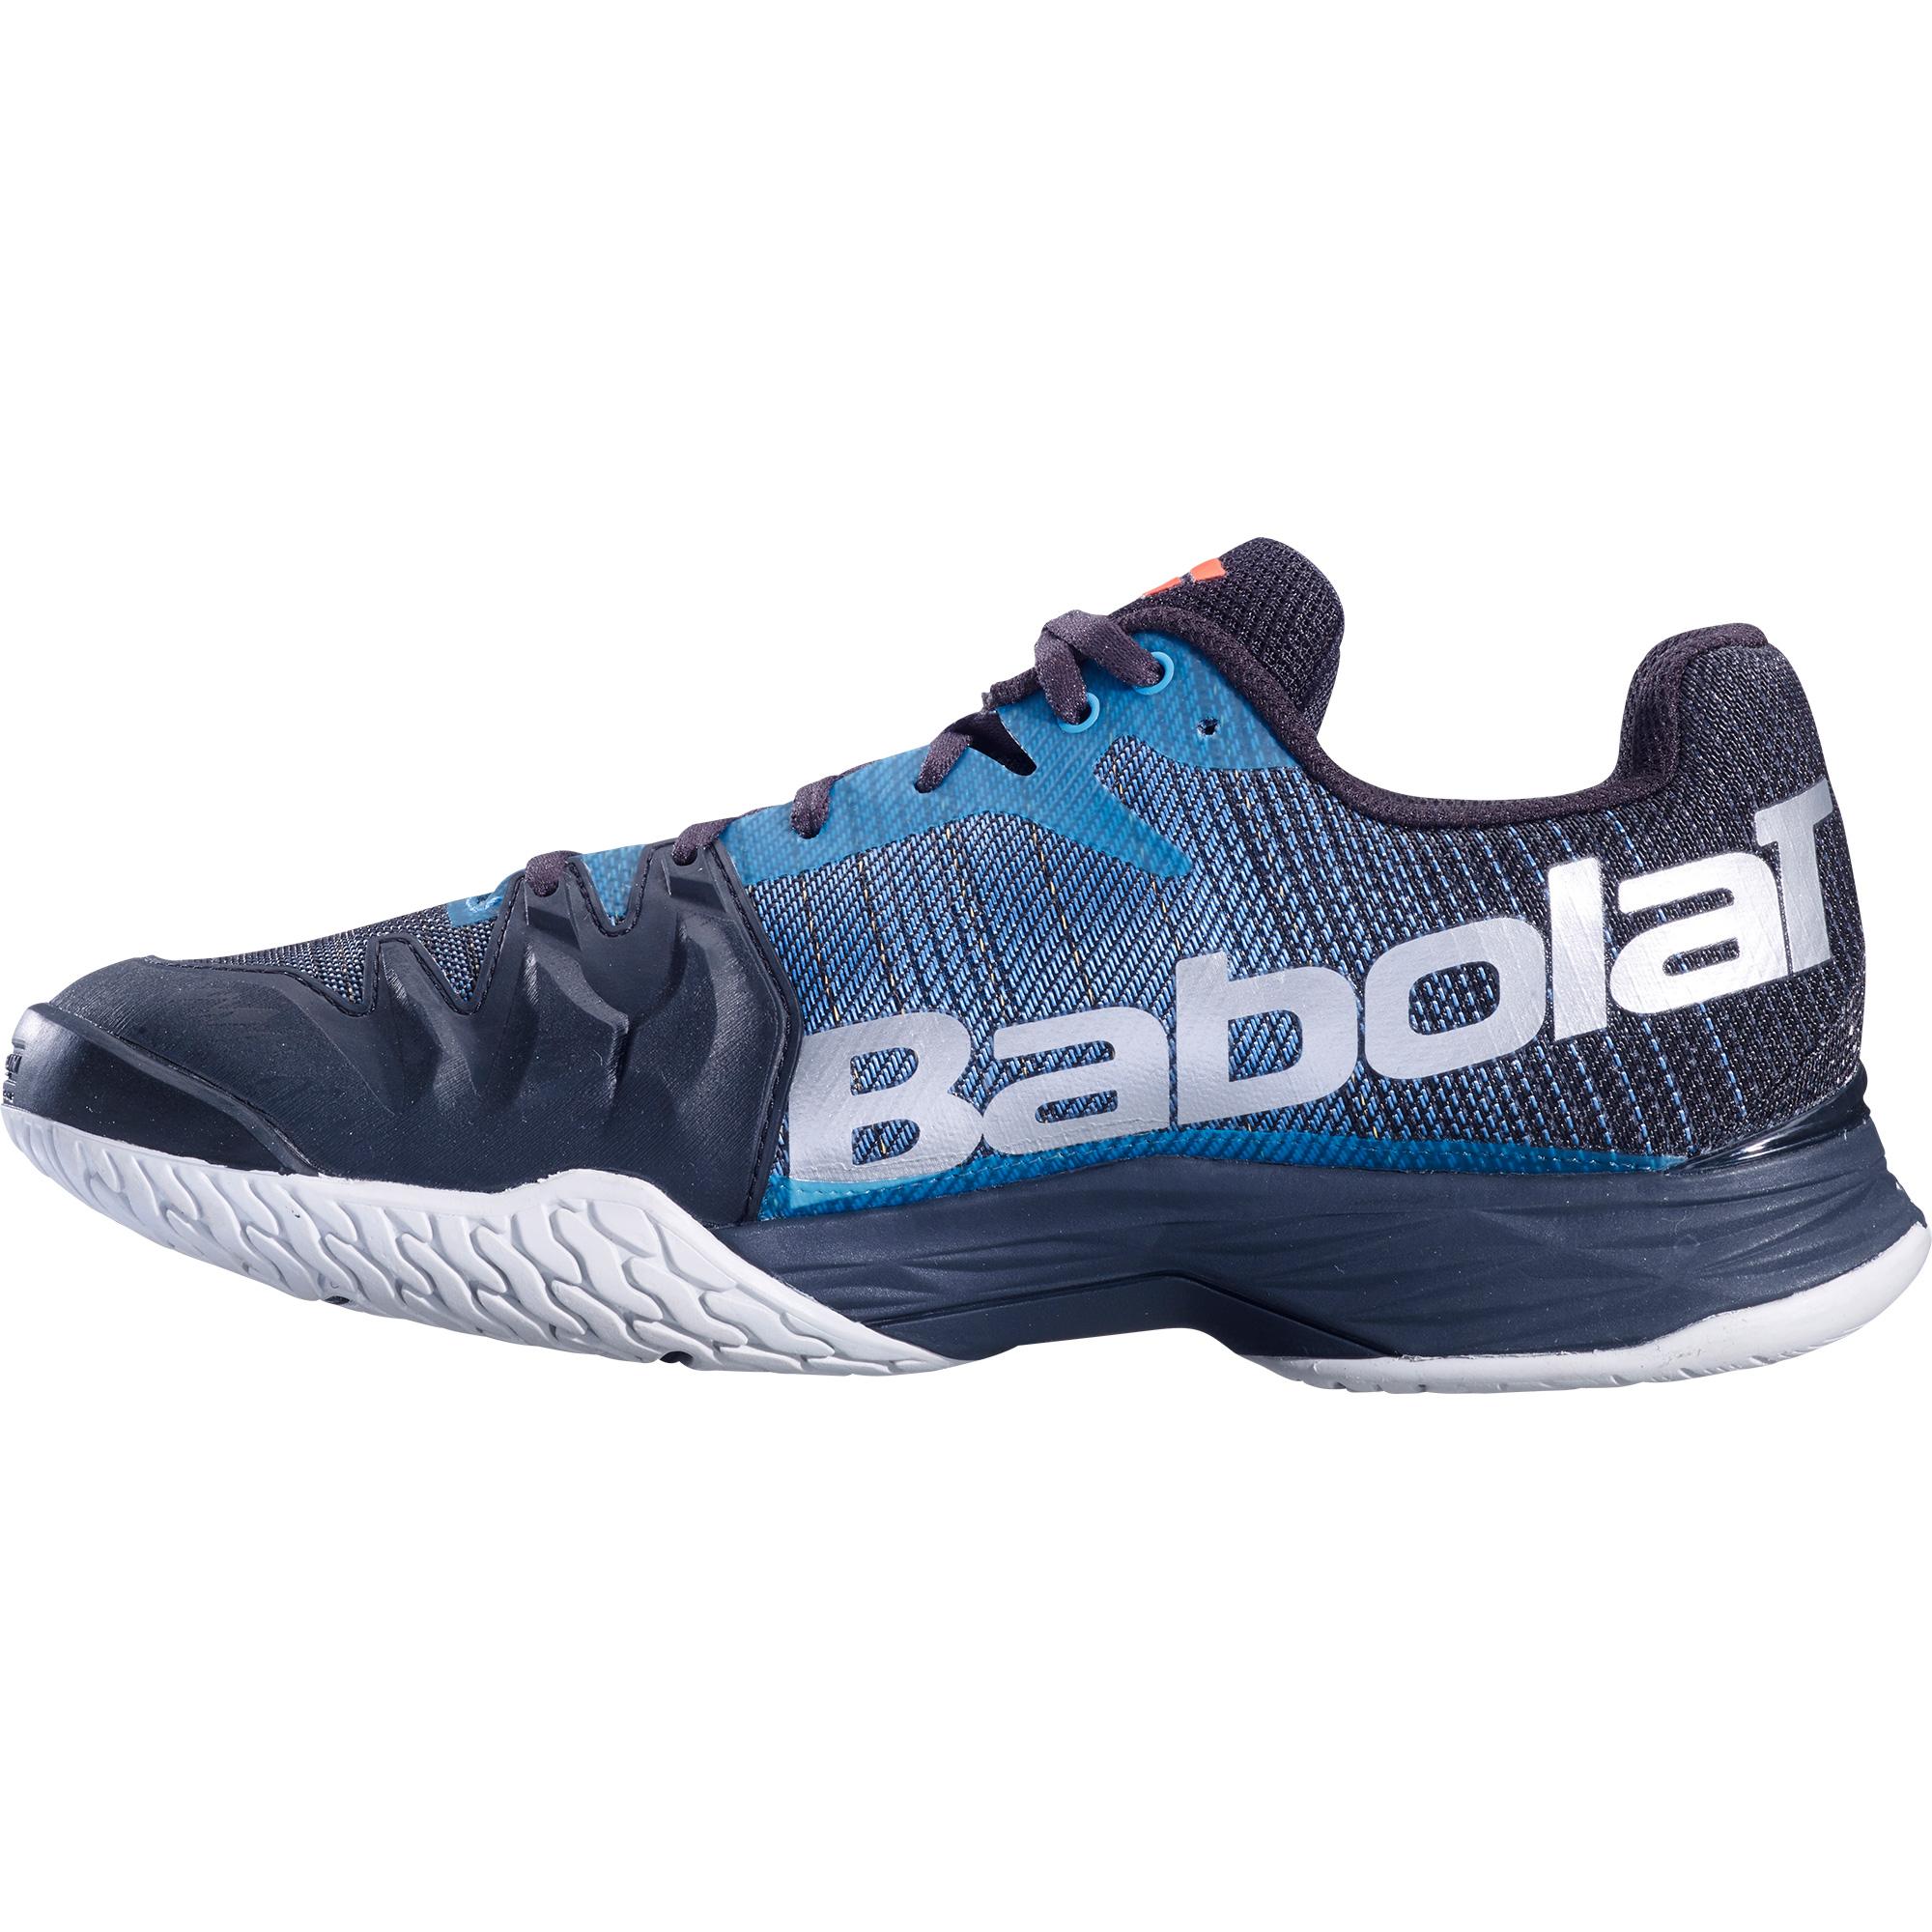 Babolat Mens Jet Mach II Tennis Shoes - Dark Blue/Black - Tennisnuts.com